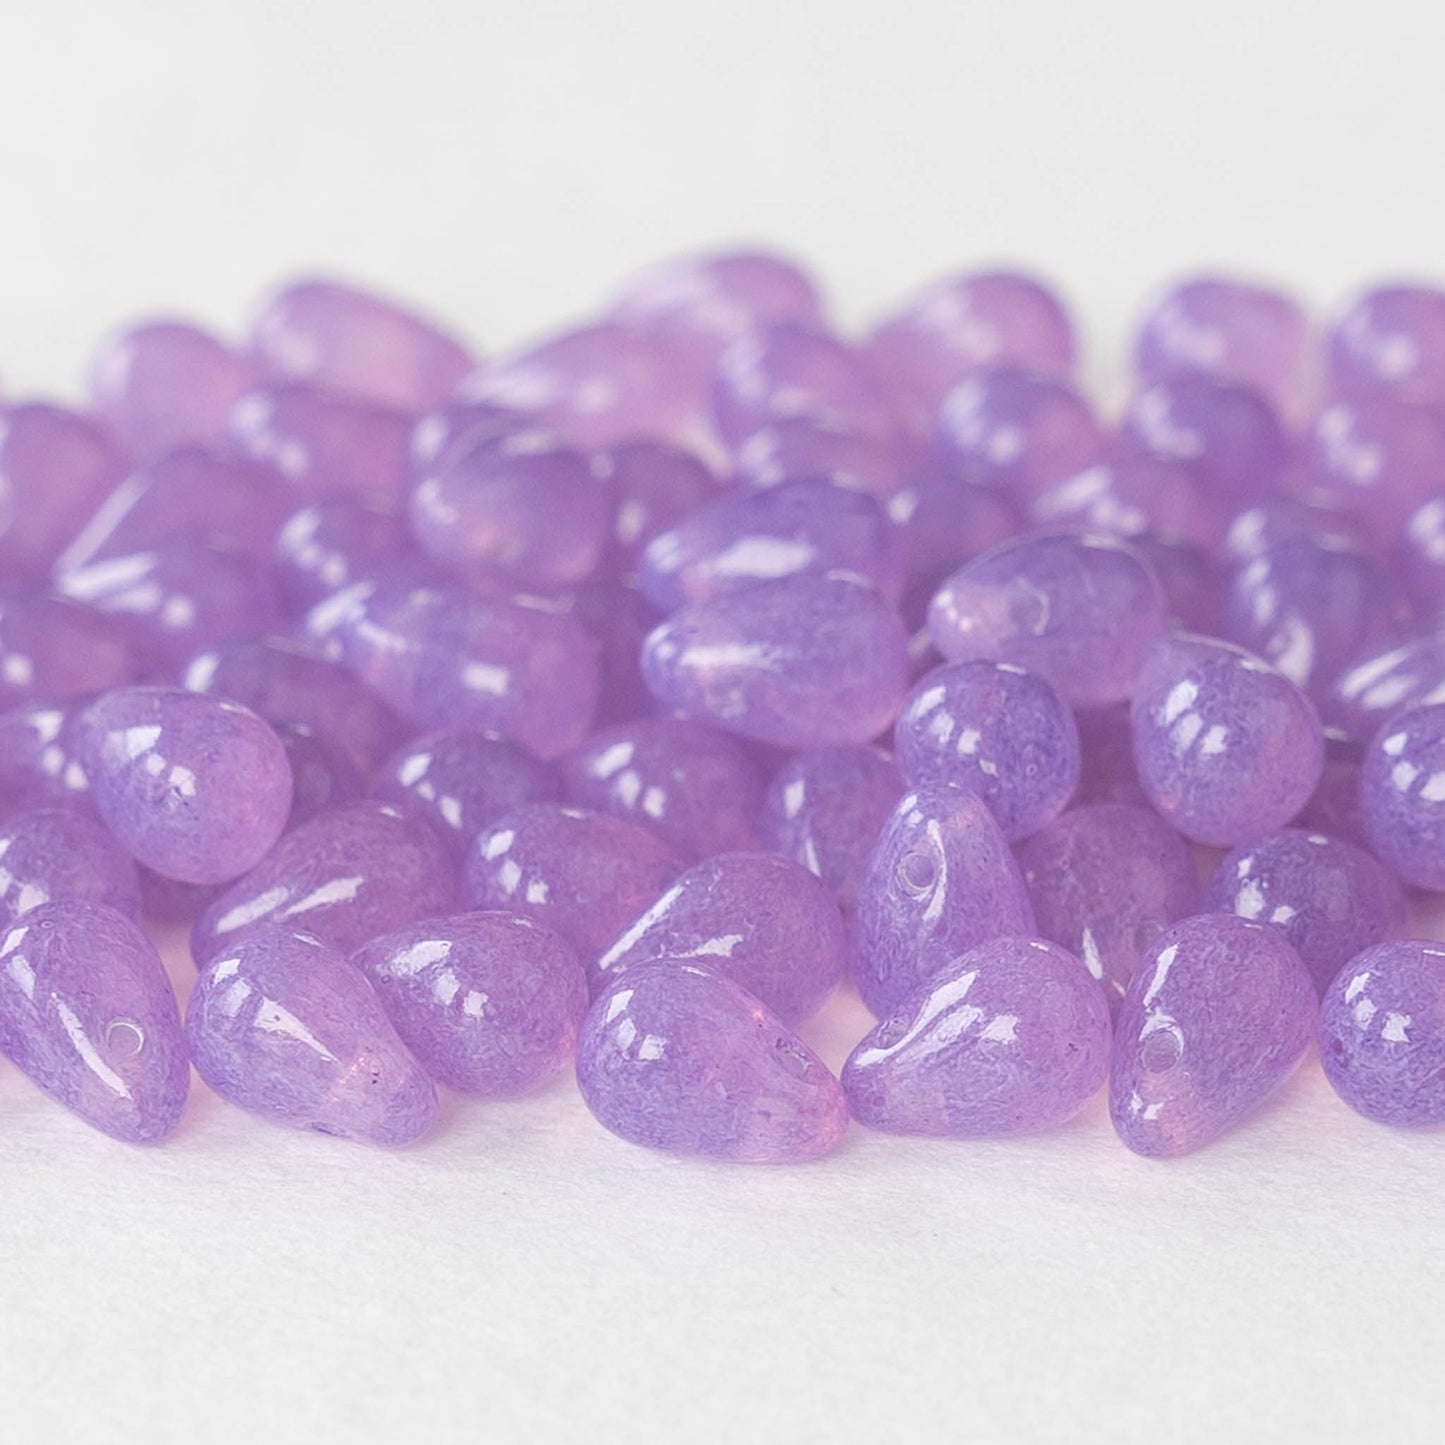 4x6mm Glass Teardrop Beads - Opaline Lilac Purple - 100 Beads